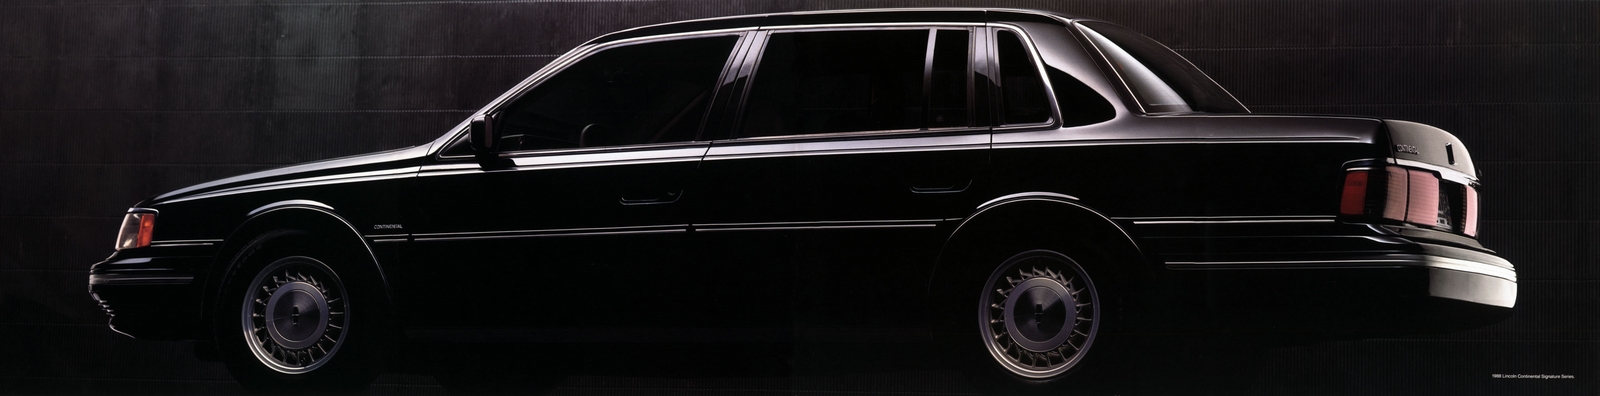 n_1988 Lincoln Continental Portfolio-06.jpg